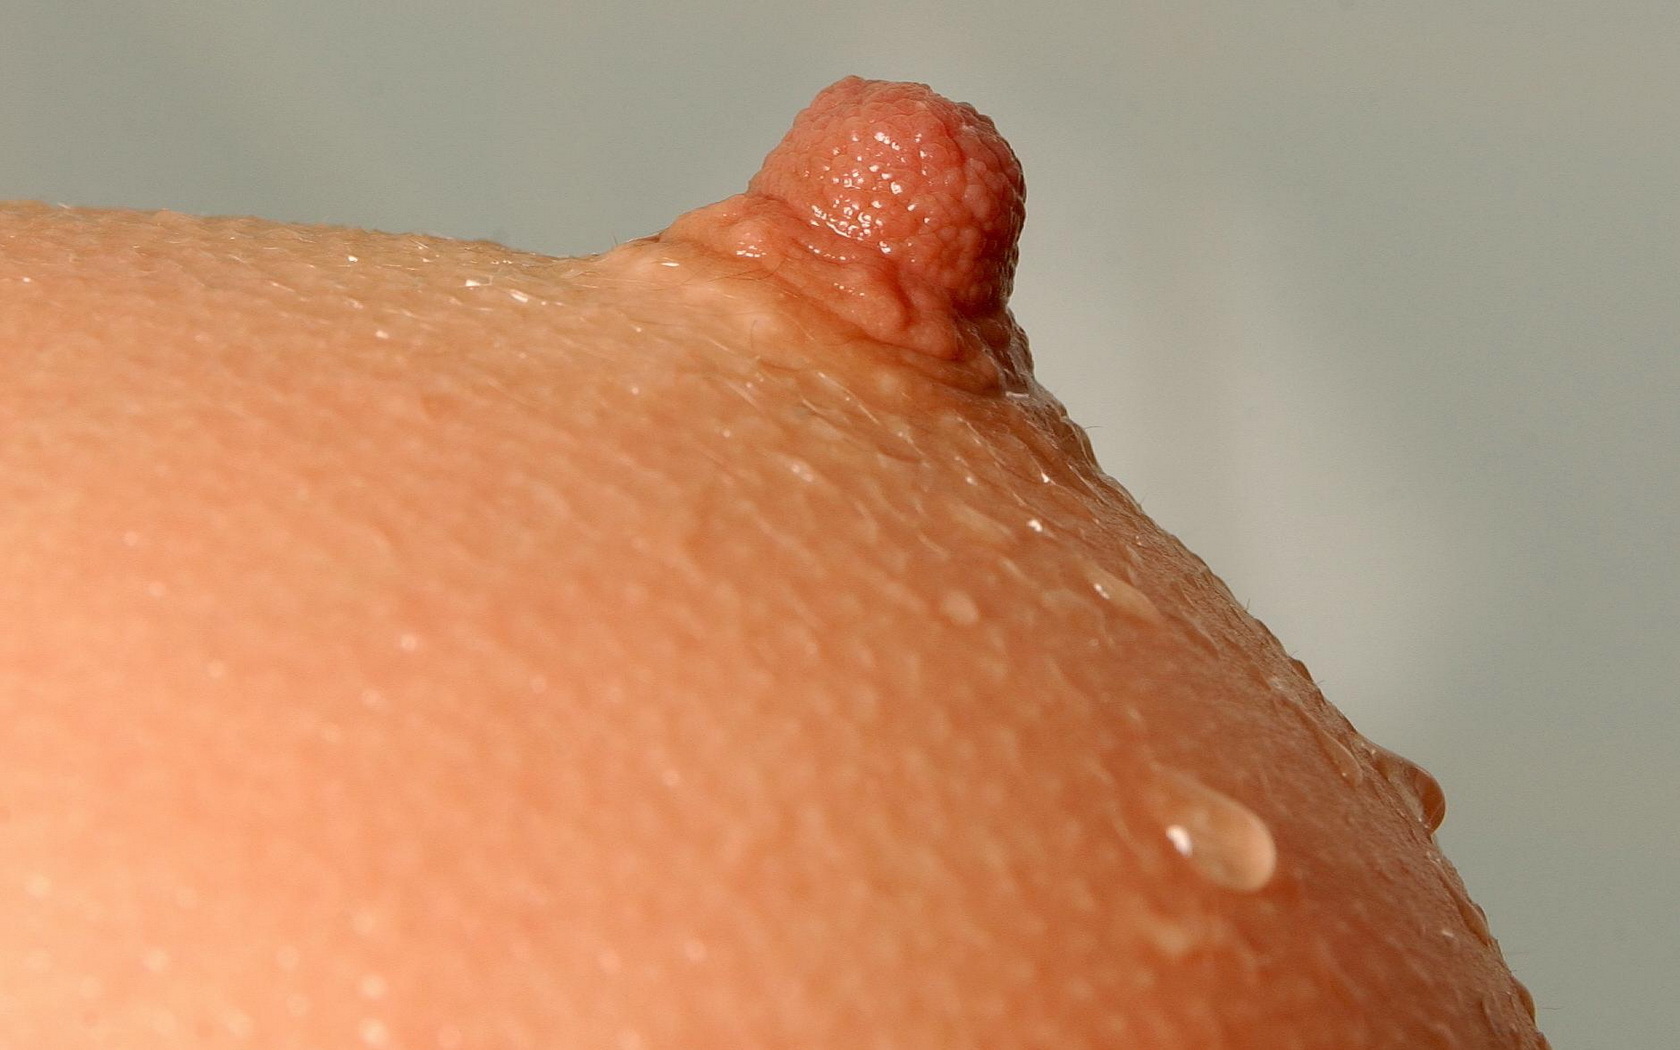 Nipples up close